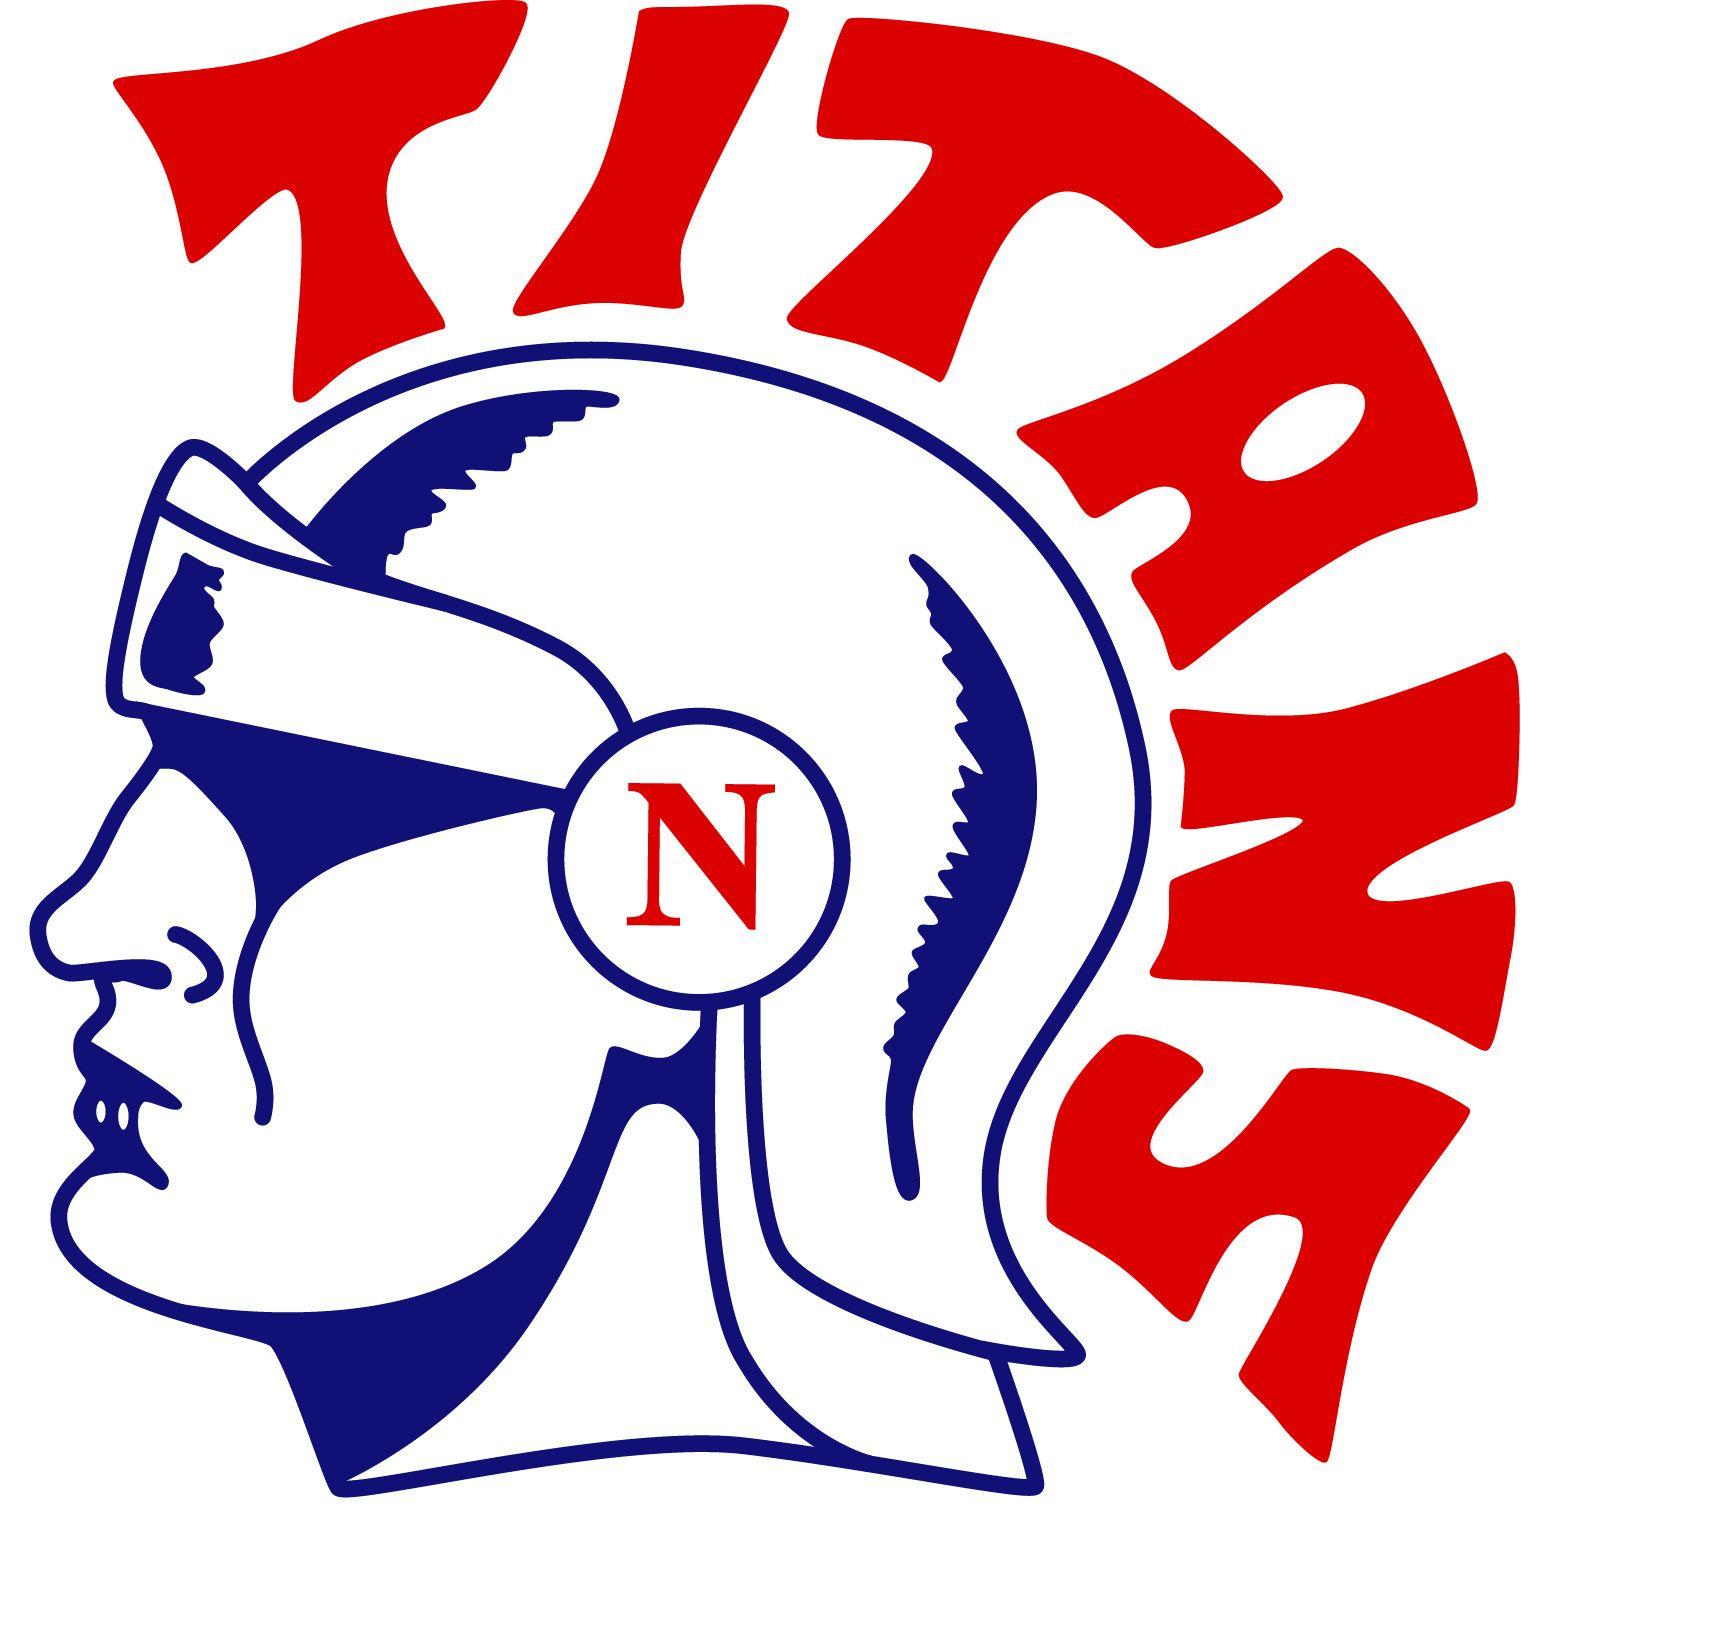 Norris Logo - NSD Image. Norris School District